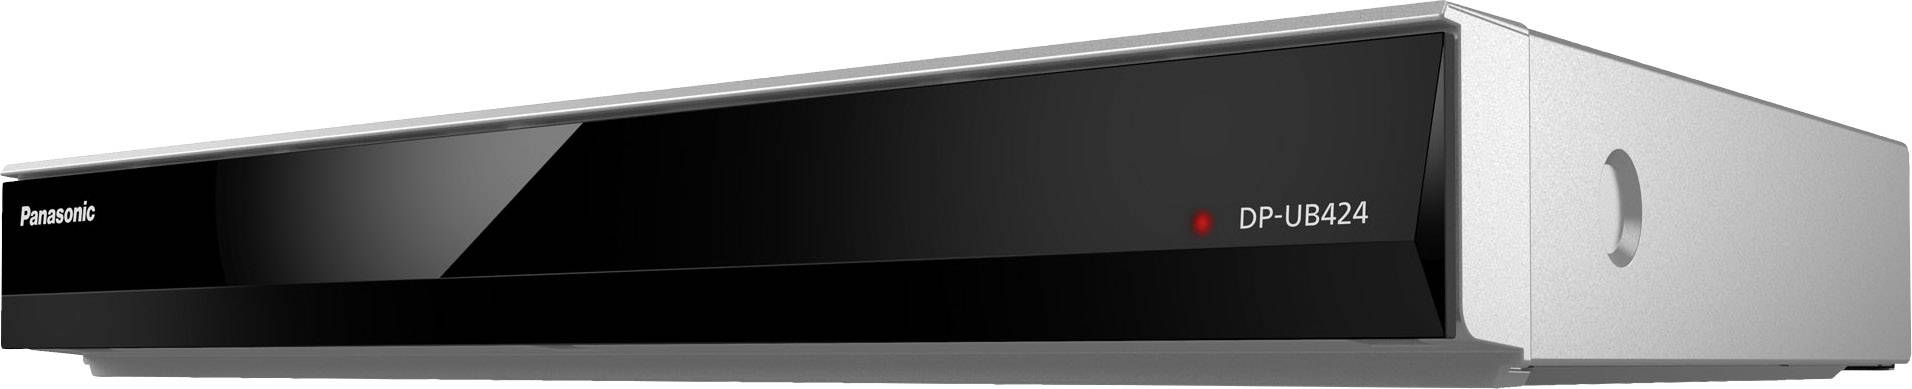 Panasonic DP-UB424 UHD Blu-ray-Player 4K Ultra HD, WLAN, Smart TV,  unterstützt Amazon Alexa, unterstützt Google Assistan kaufen